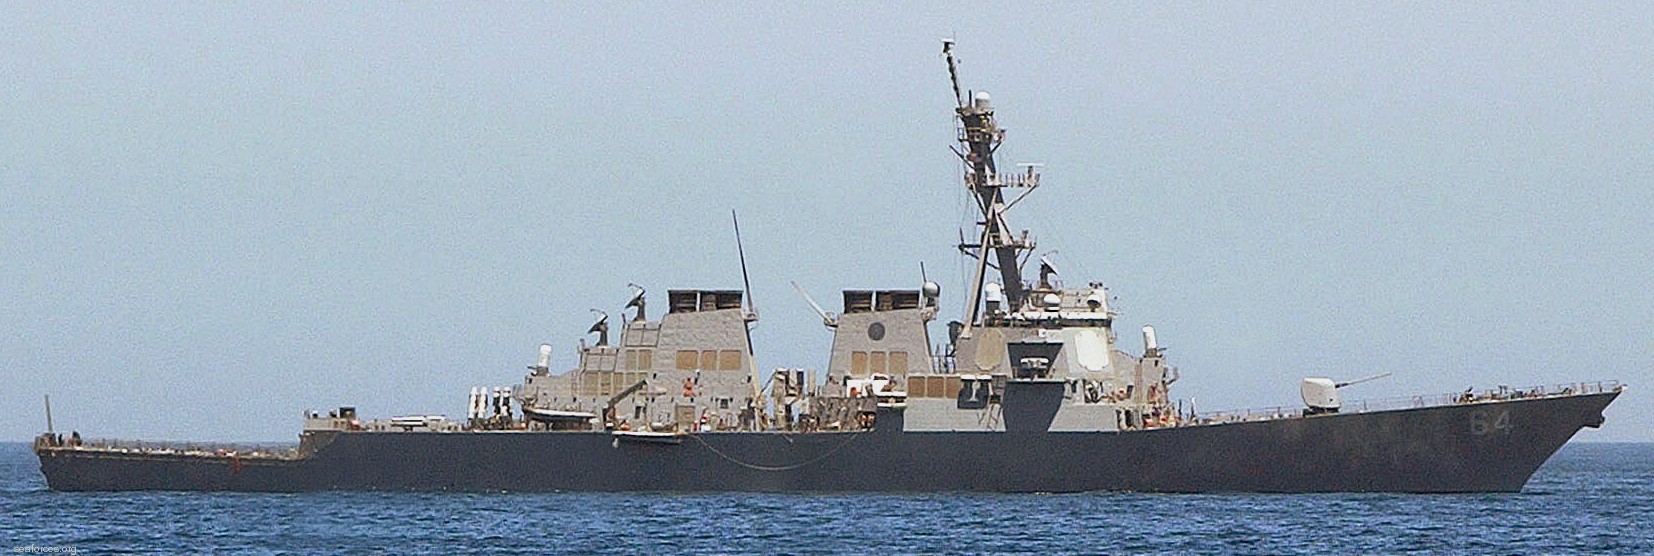 ddg-64 uss carney destroyer arleigh burke class navy 90 operation enduring freedom